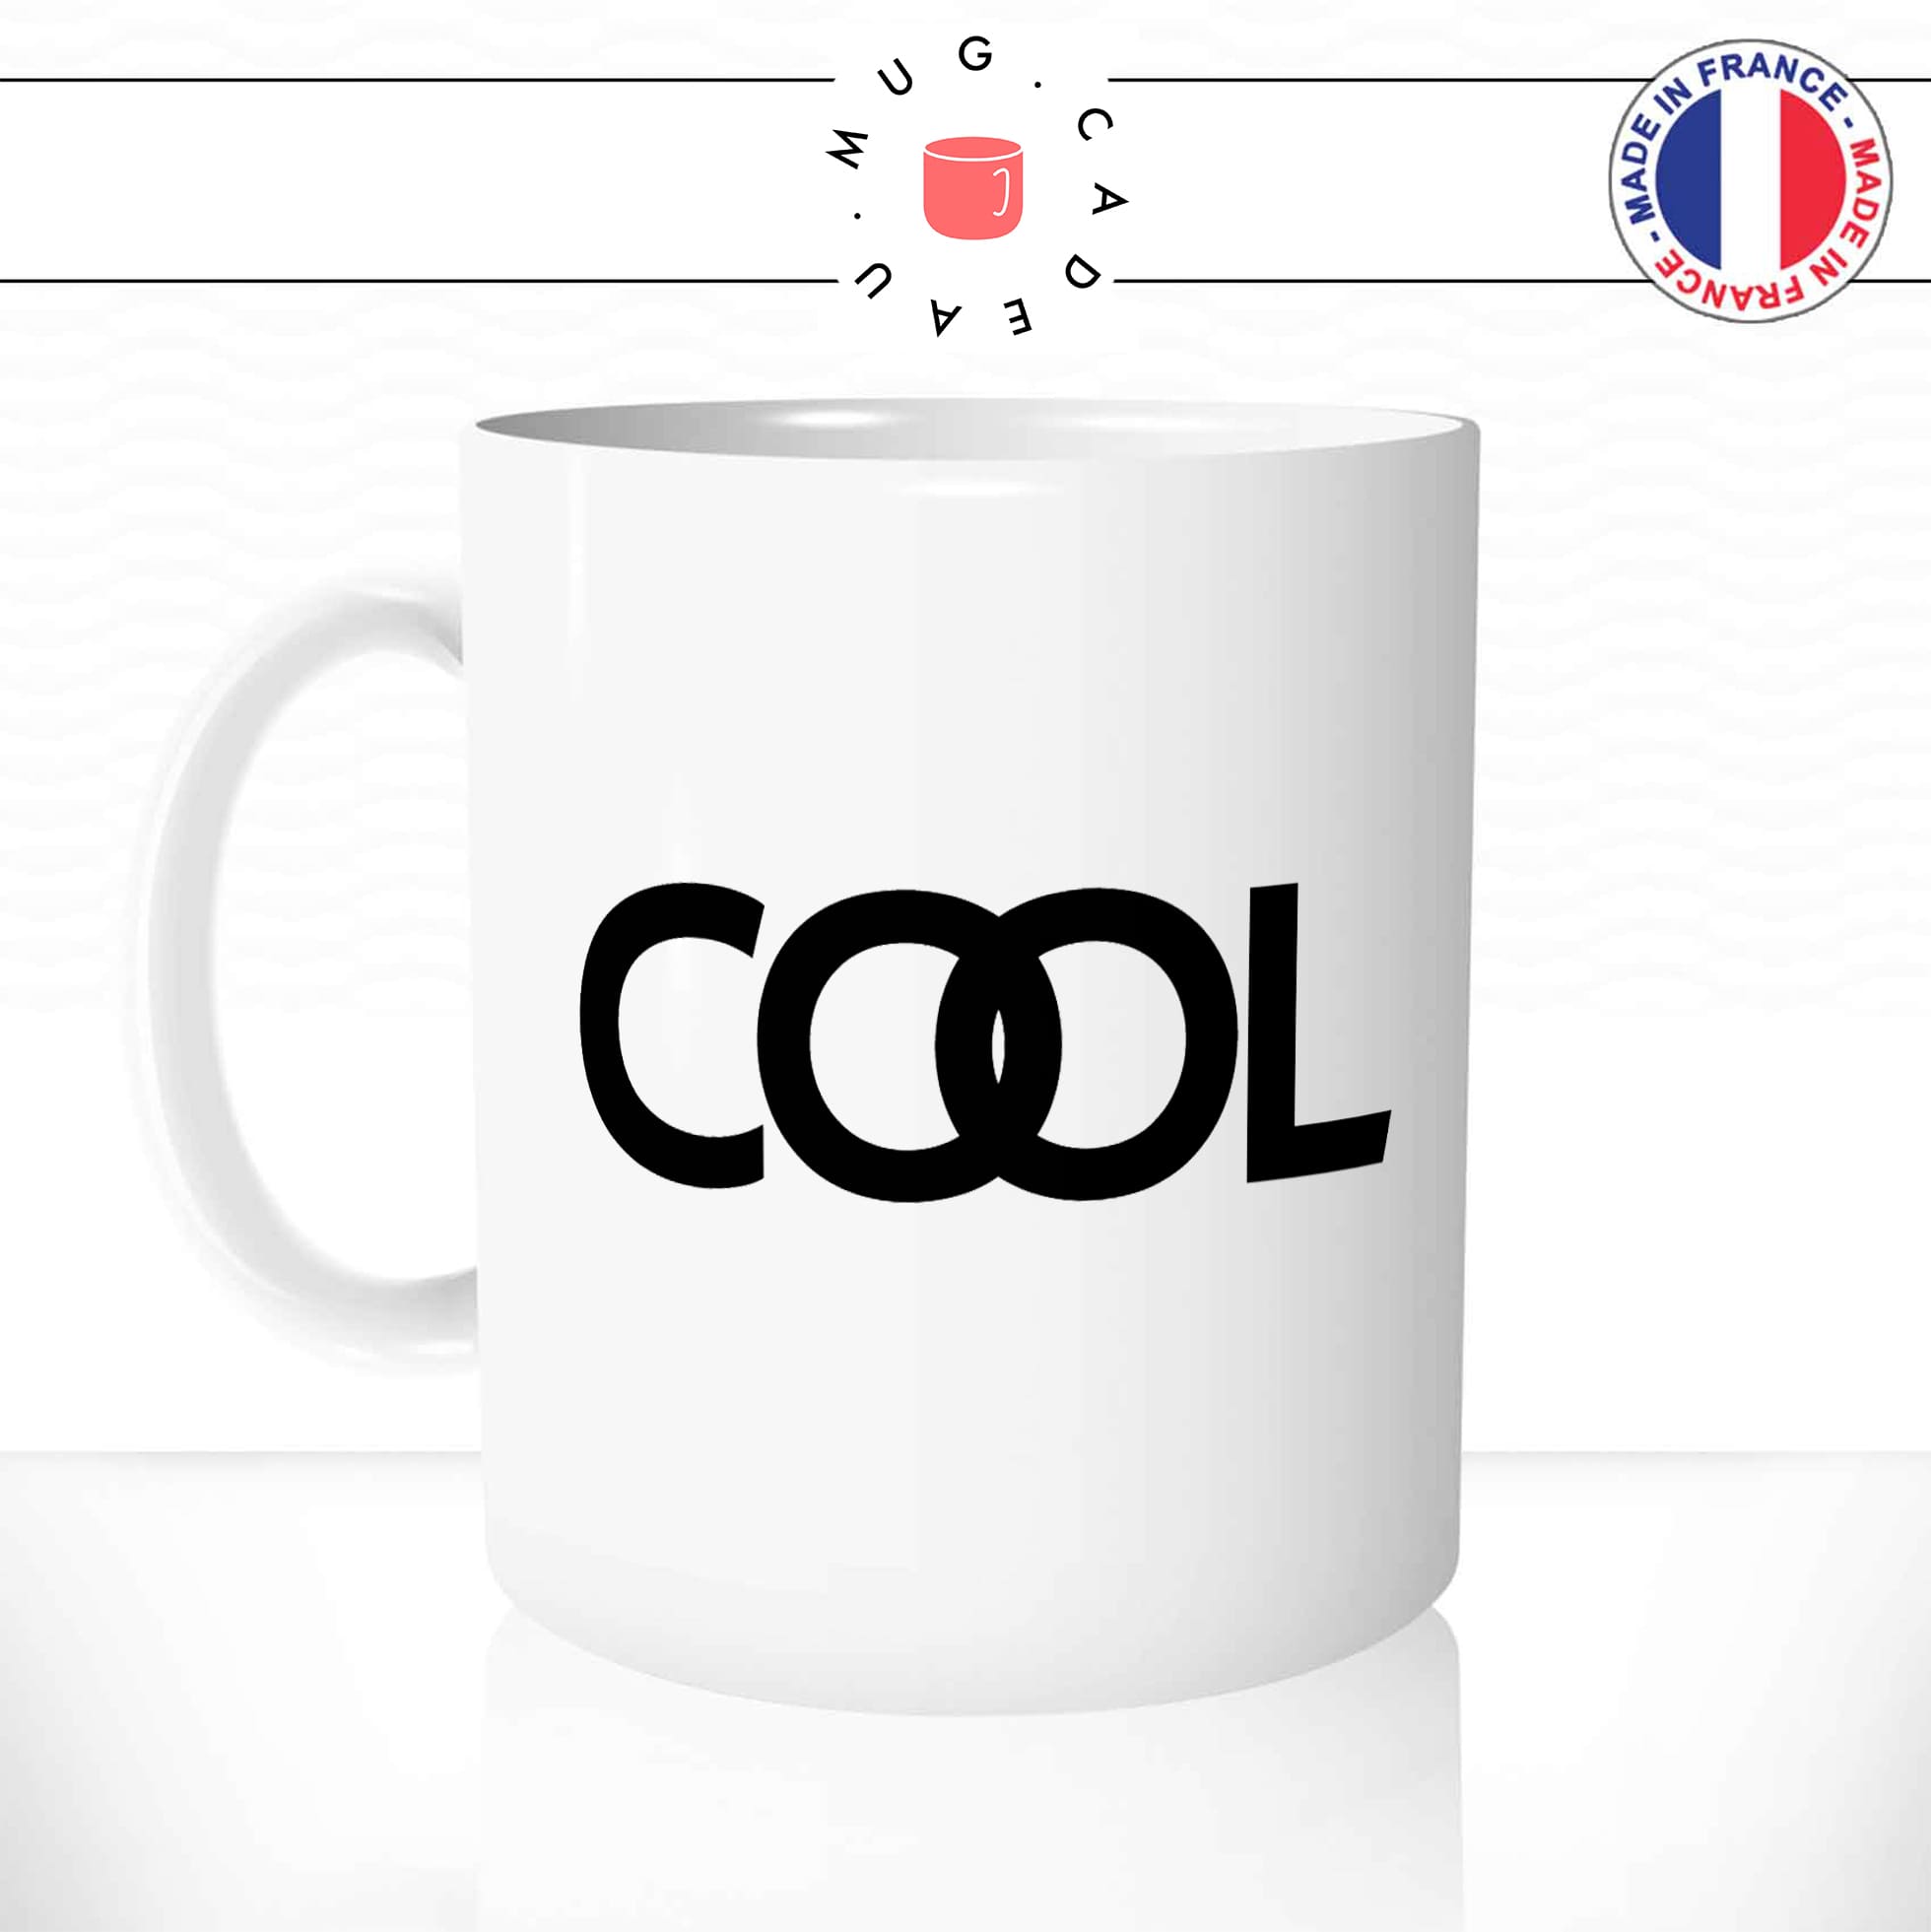 mug-tasse-blanc-cool-mot-anglais-expression-jeune-homme-mec-ado-humour-fun-idée-cadeau-originale-coole-unique